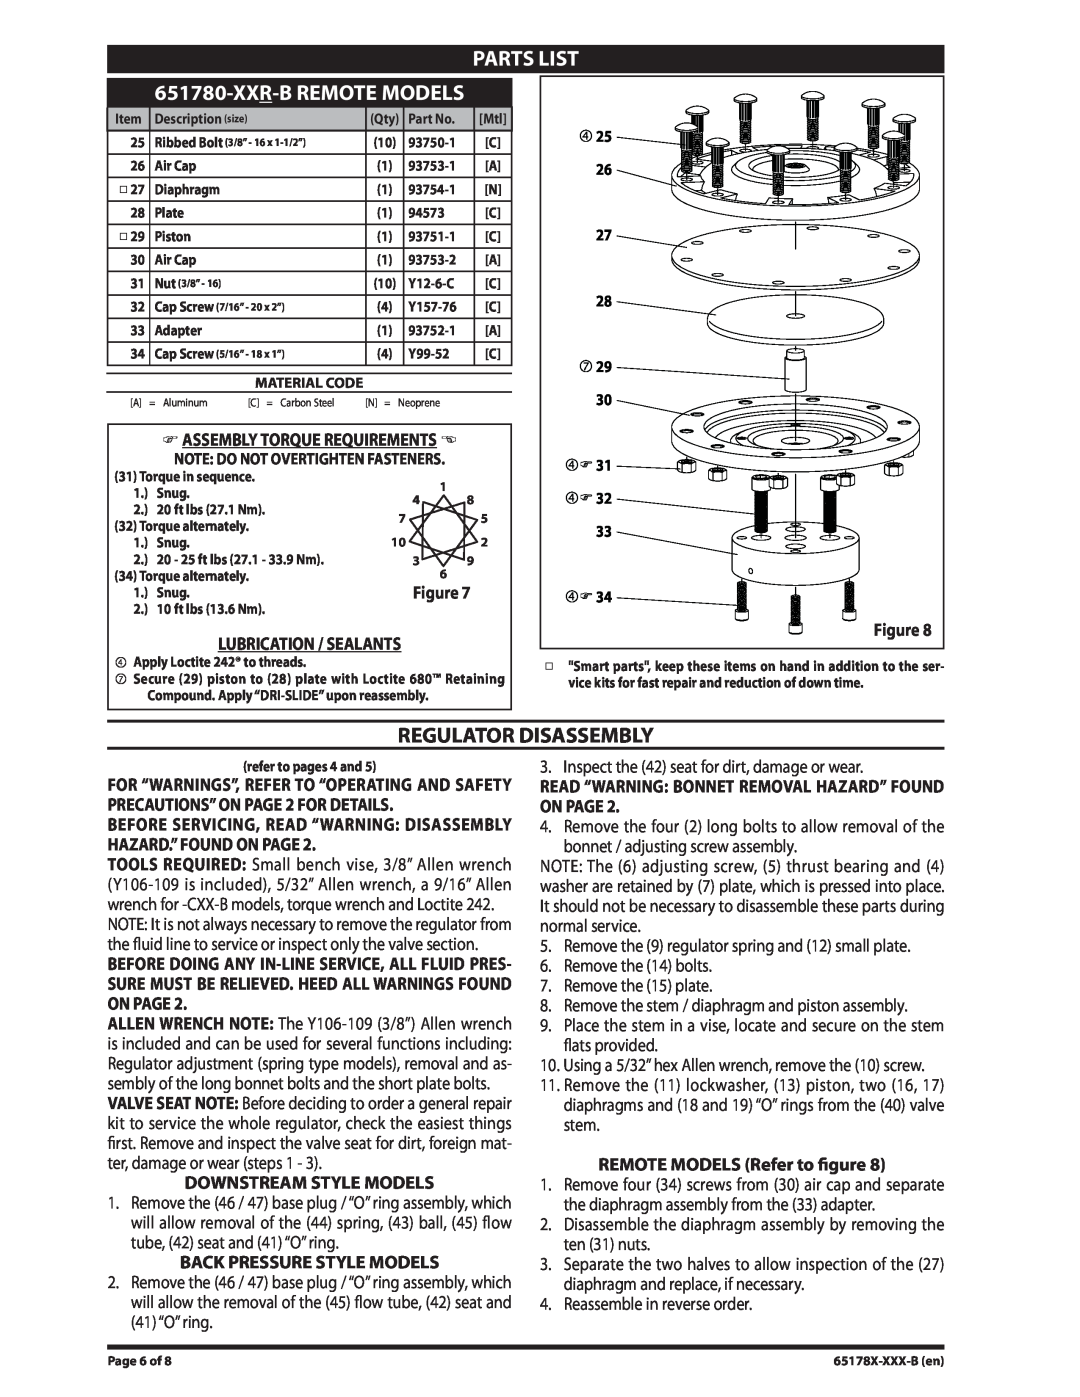 Ingersoll-Rand 65178X-XXX-B specifications Parts List, Xxr-Bremote Models, Regulator Disassembly, Downstream Style Models 